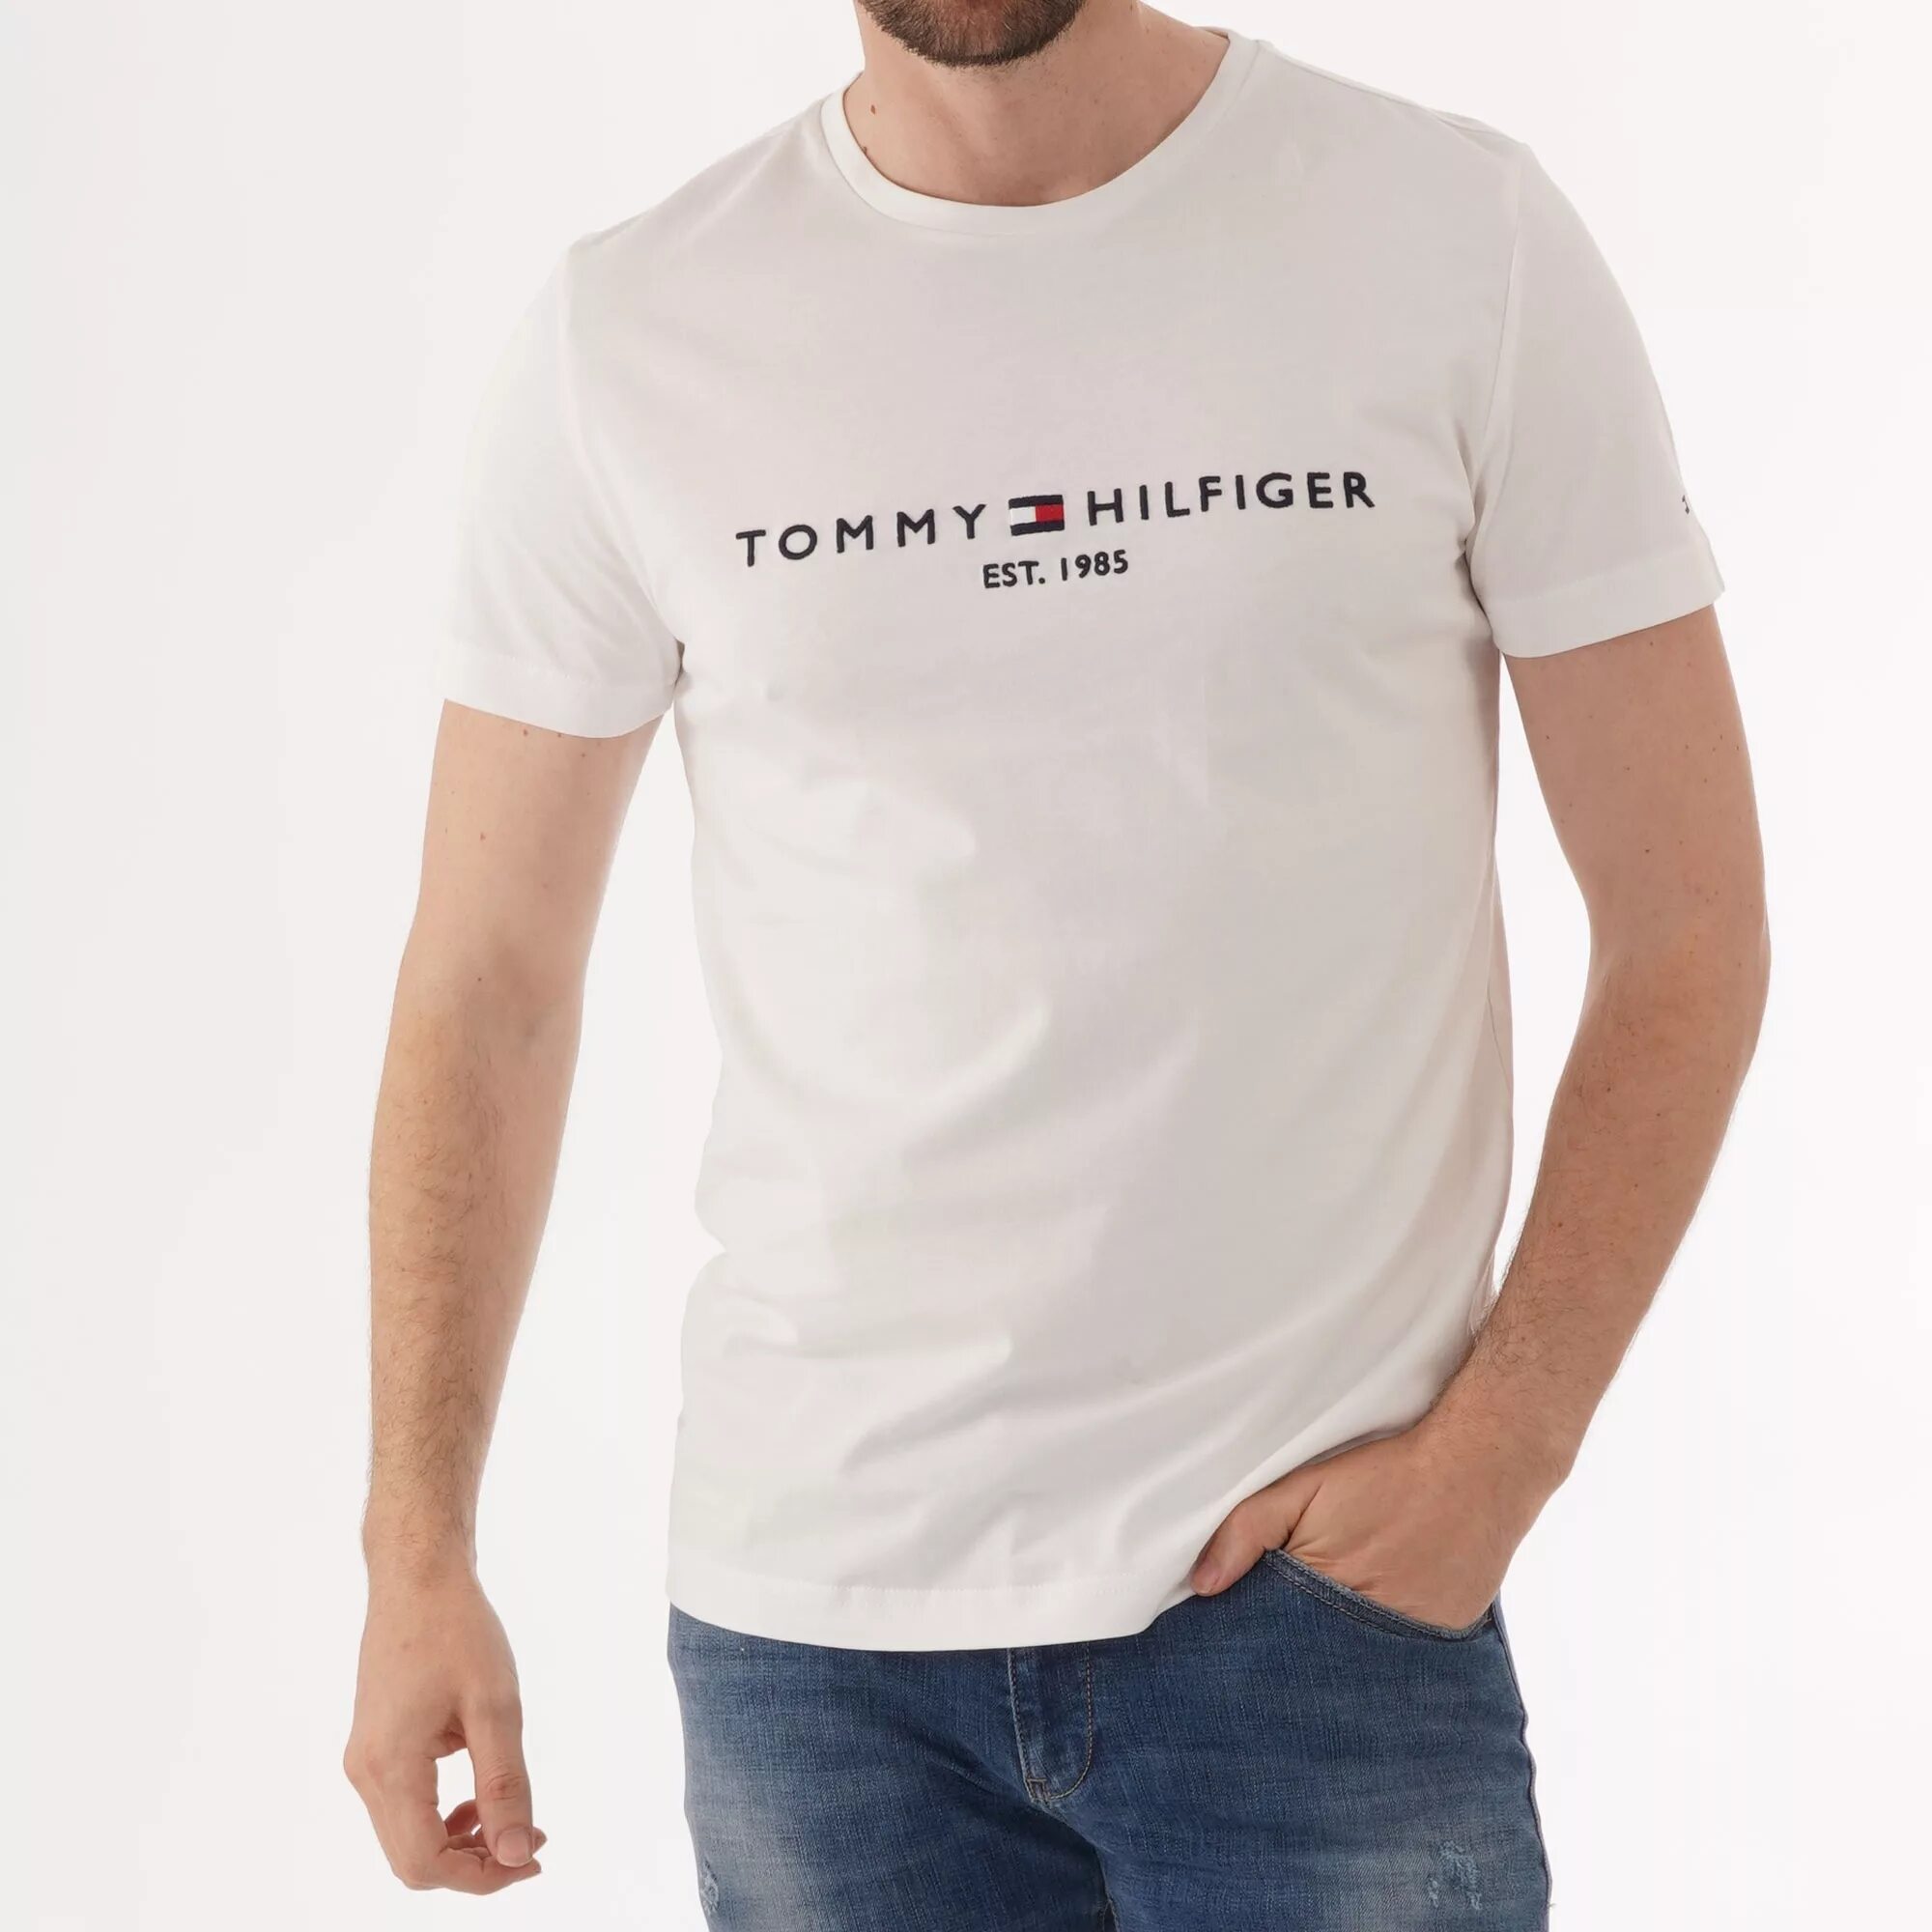 T me att logins. Tommy Hilfiger t Shirt. Raglan t-Shirt Tommy Hilfiger. Tommy Hilfiger Regular Fit Crew t-Shirt. Футболка Томми Хилфигер мужские бежевая.